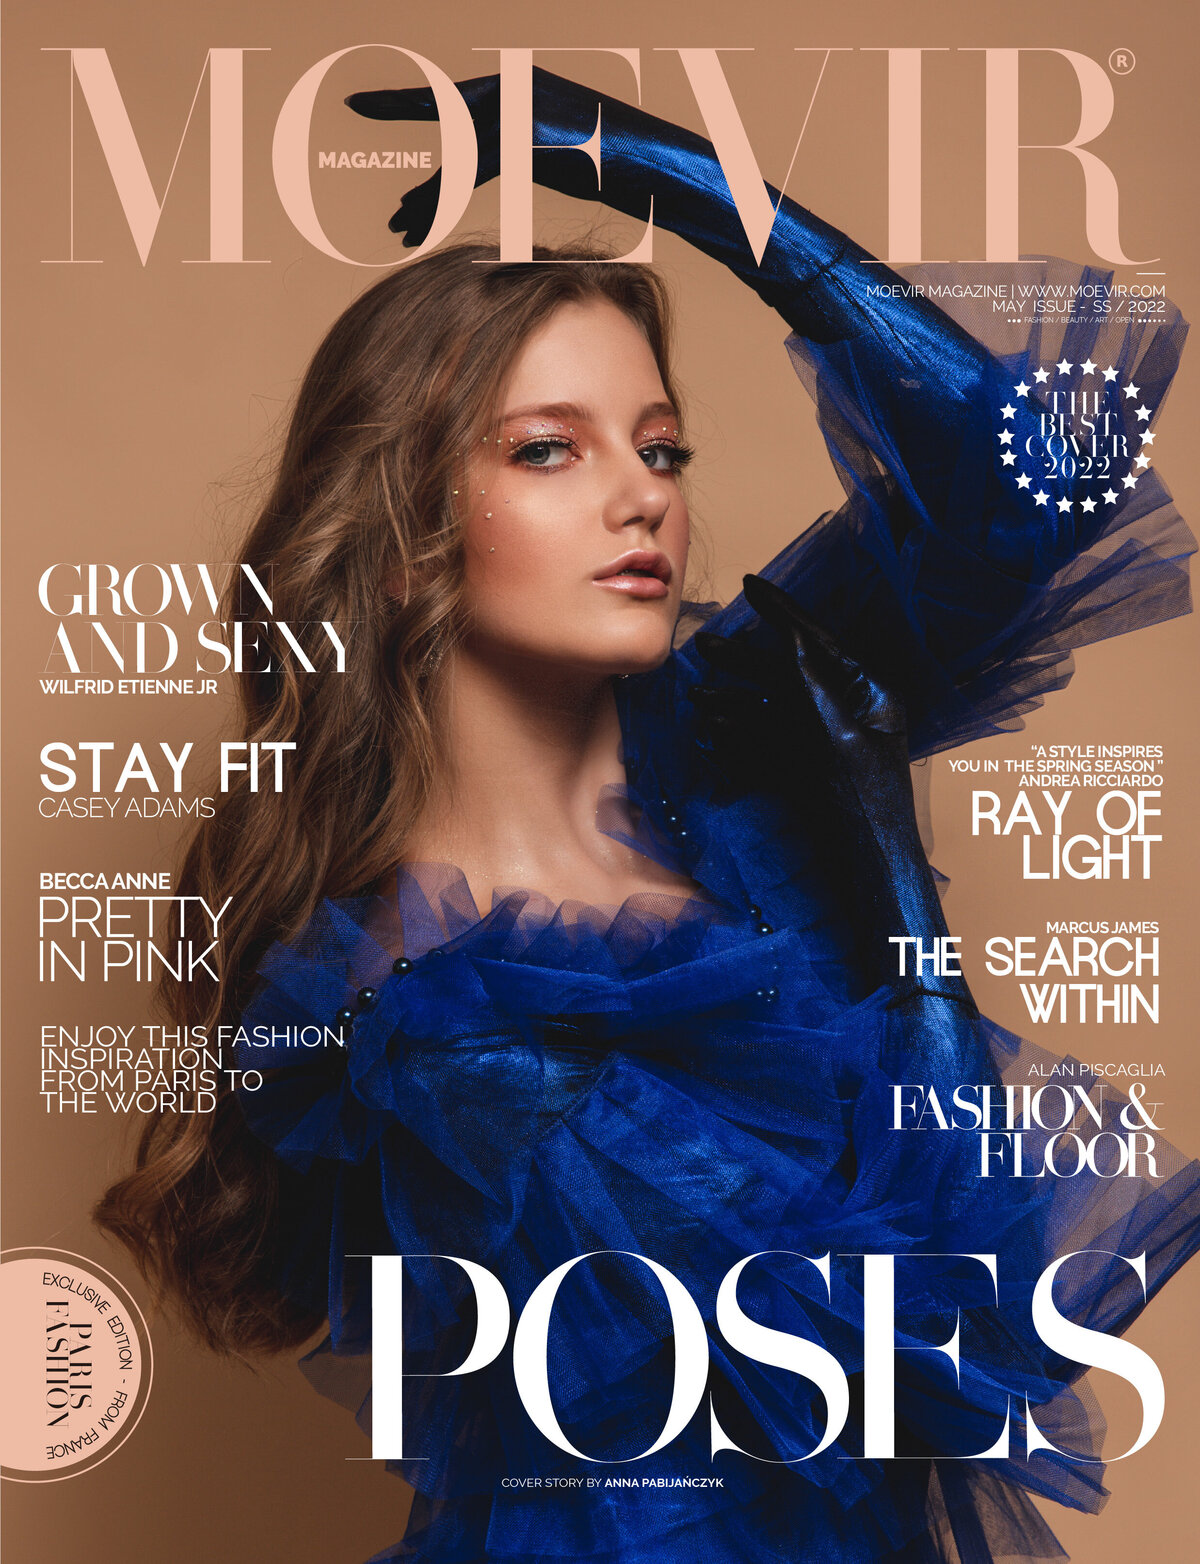 Moevir Magazine May Issue 2022